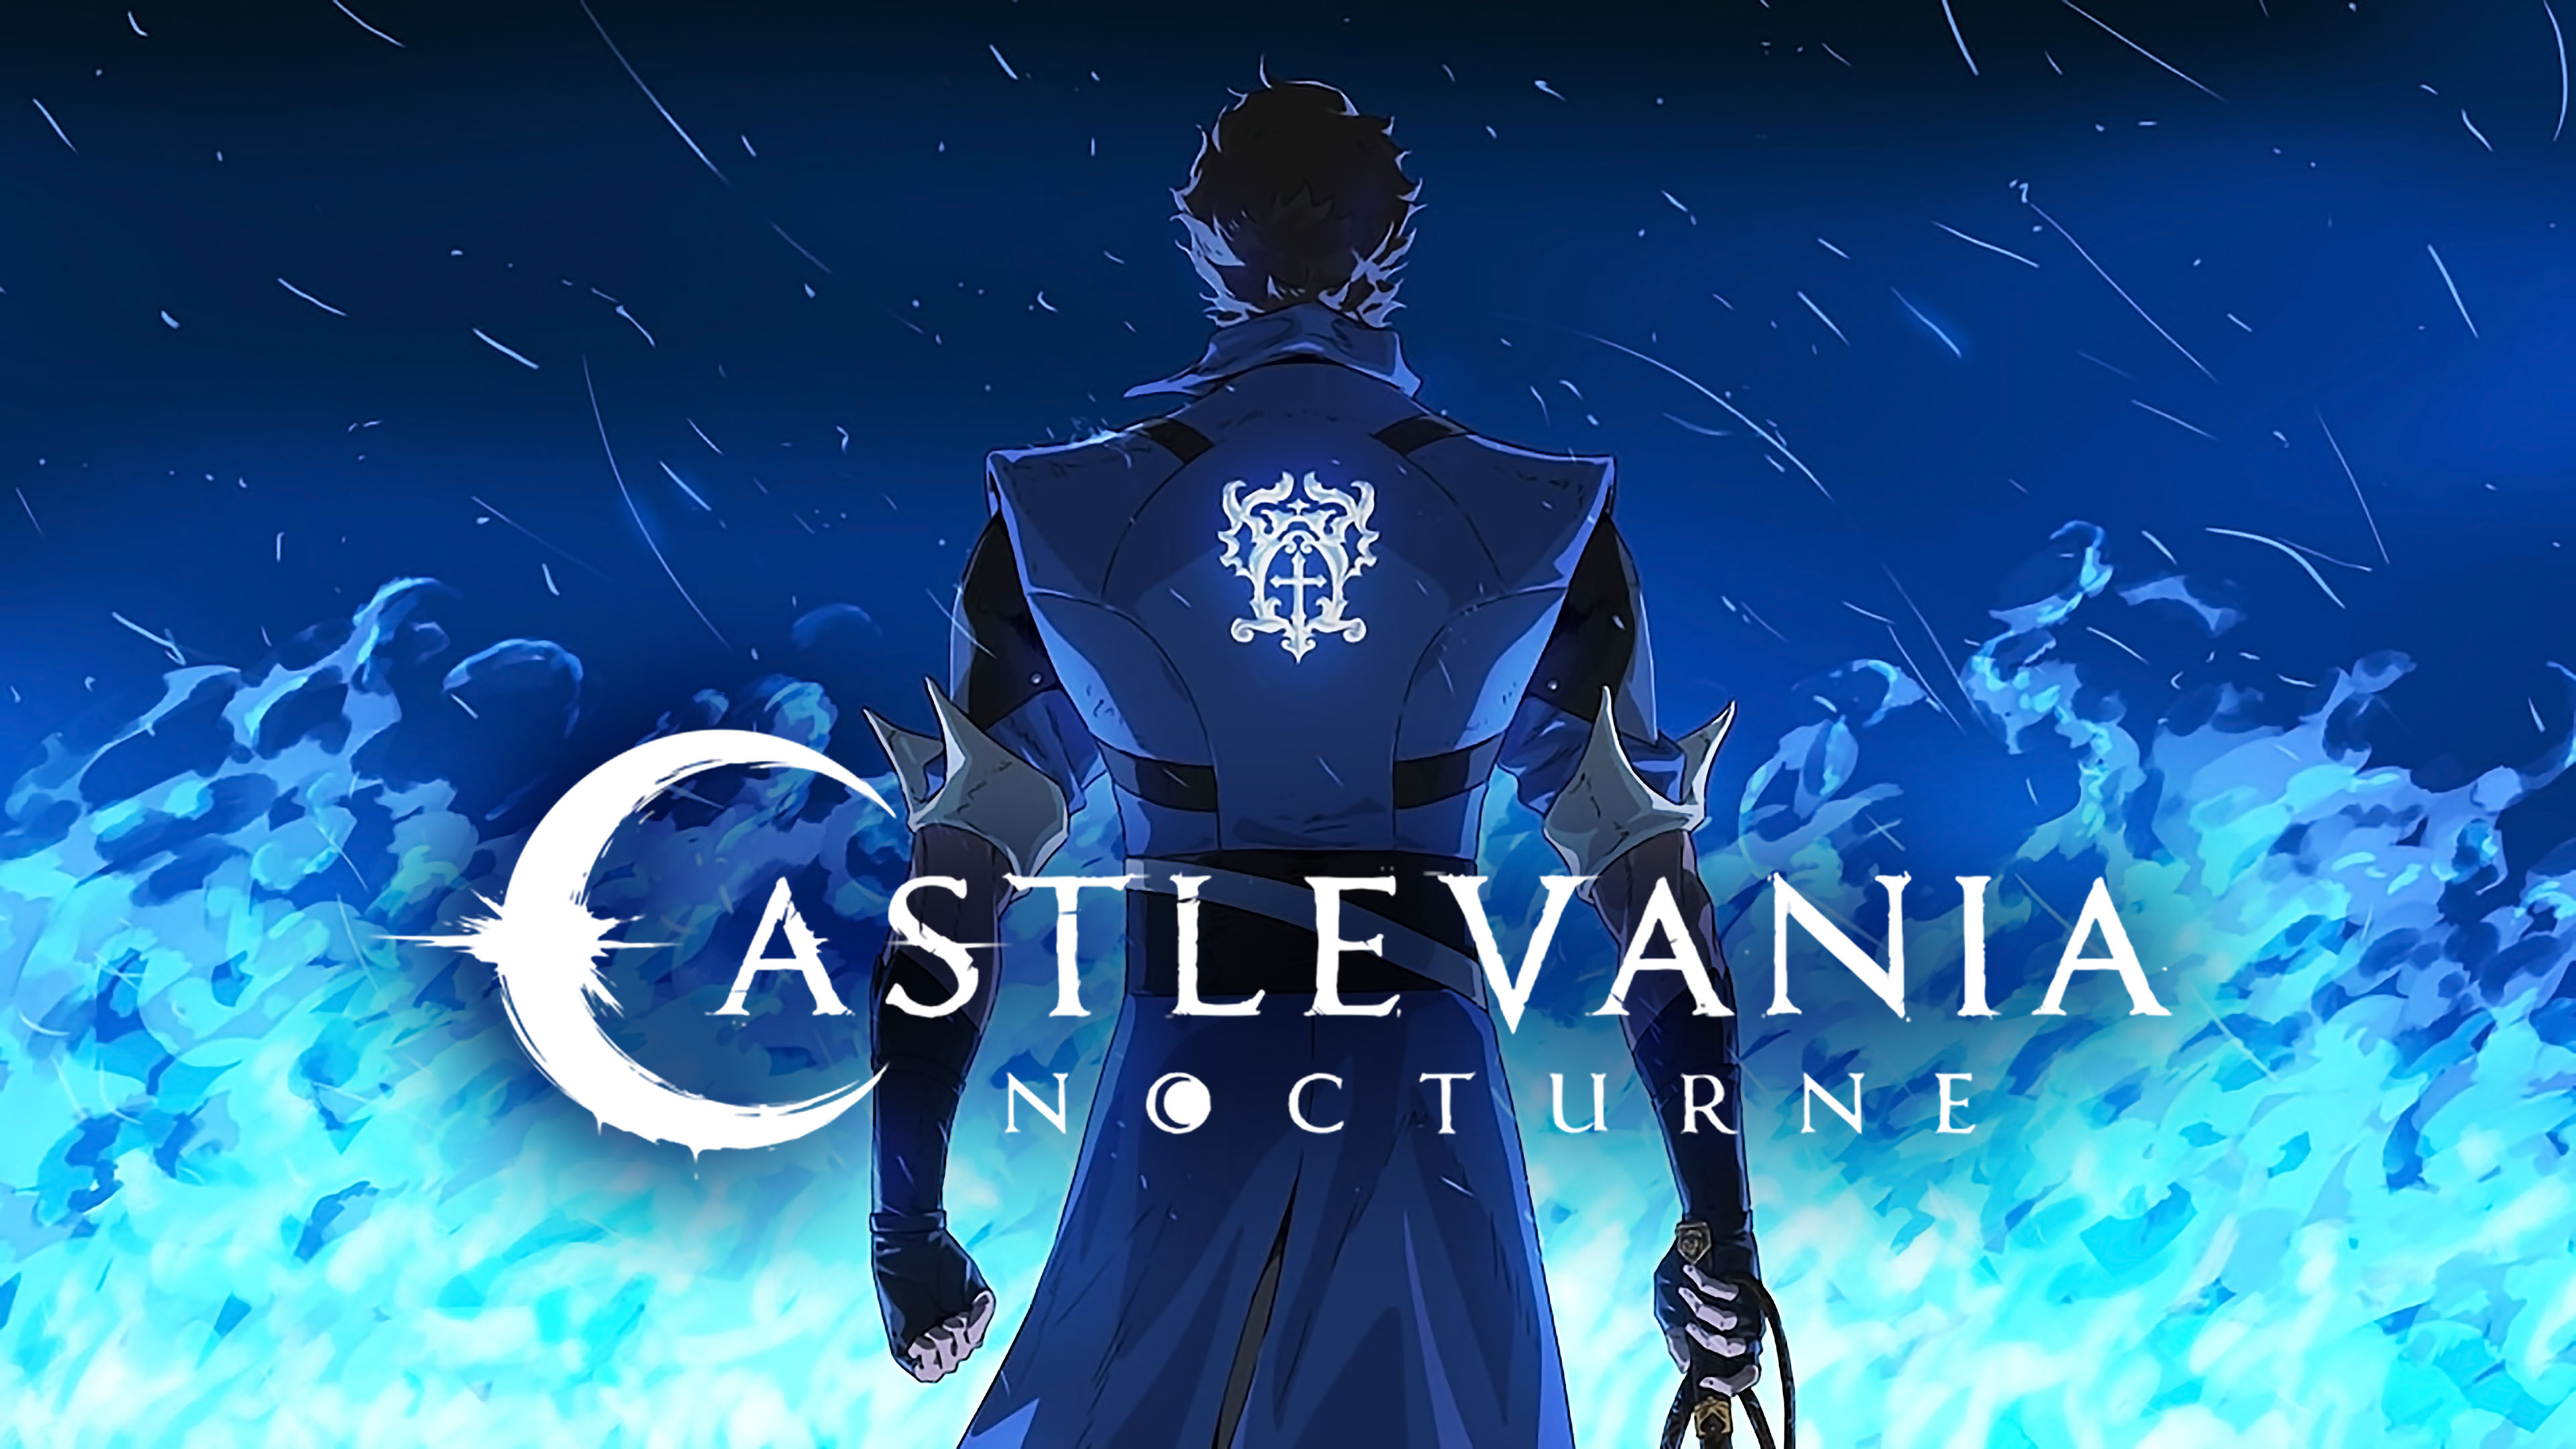 The second season of Castlevania: Nocturne is already in development